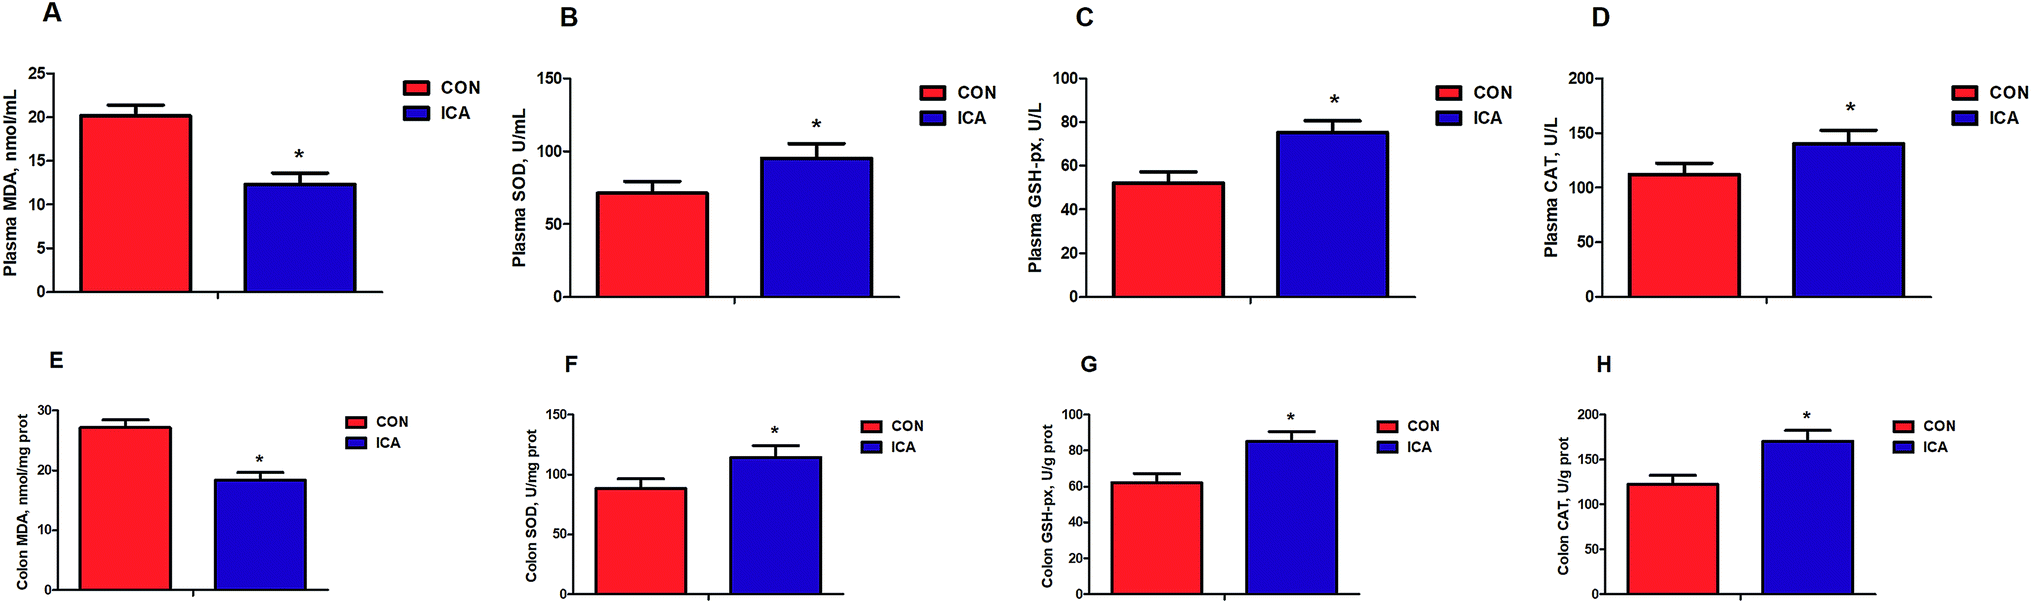 Icariin Enhances Intestinal Barrier Function By Inhibiting Nf Kb Signaling Pathways And Modulating Gut Microbiota In A Piglet Model Rsc Advances Rsc Publishing Doi 10 1039 C9rah